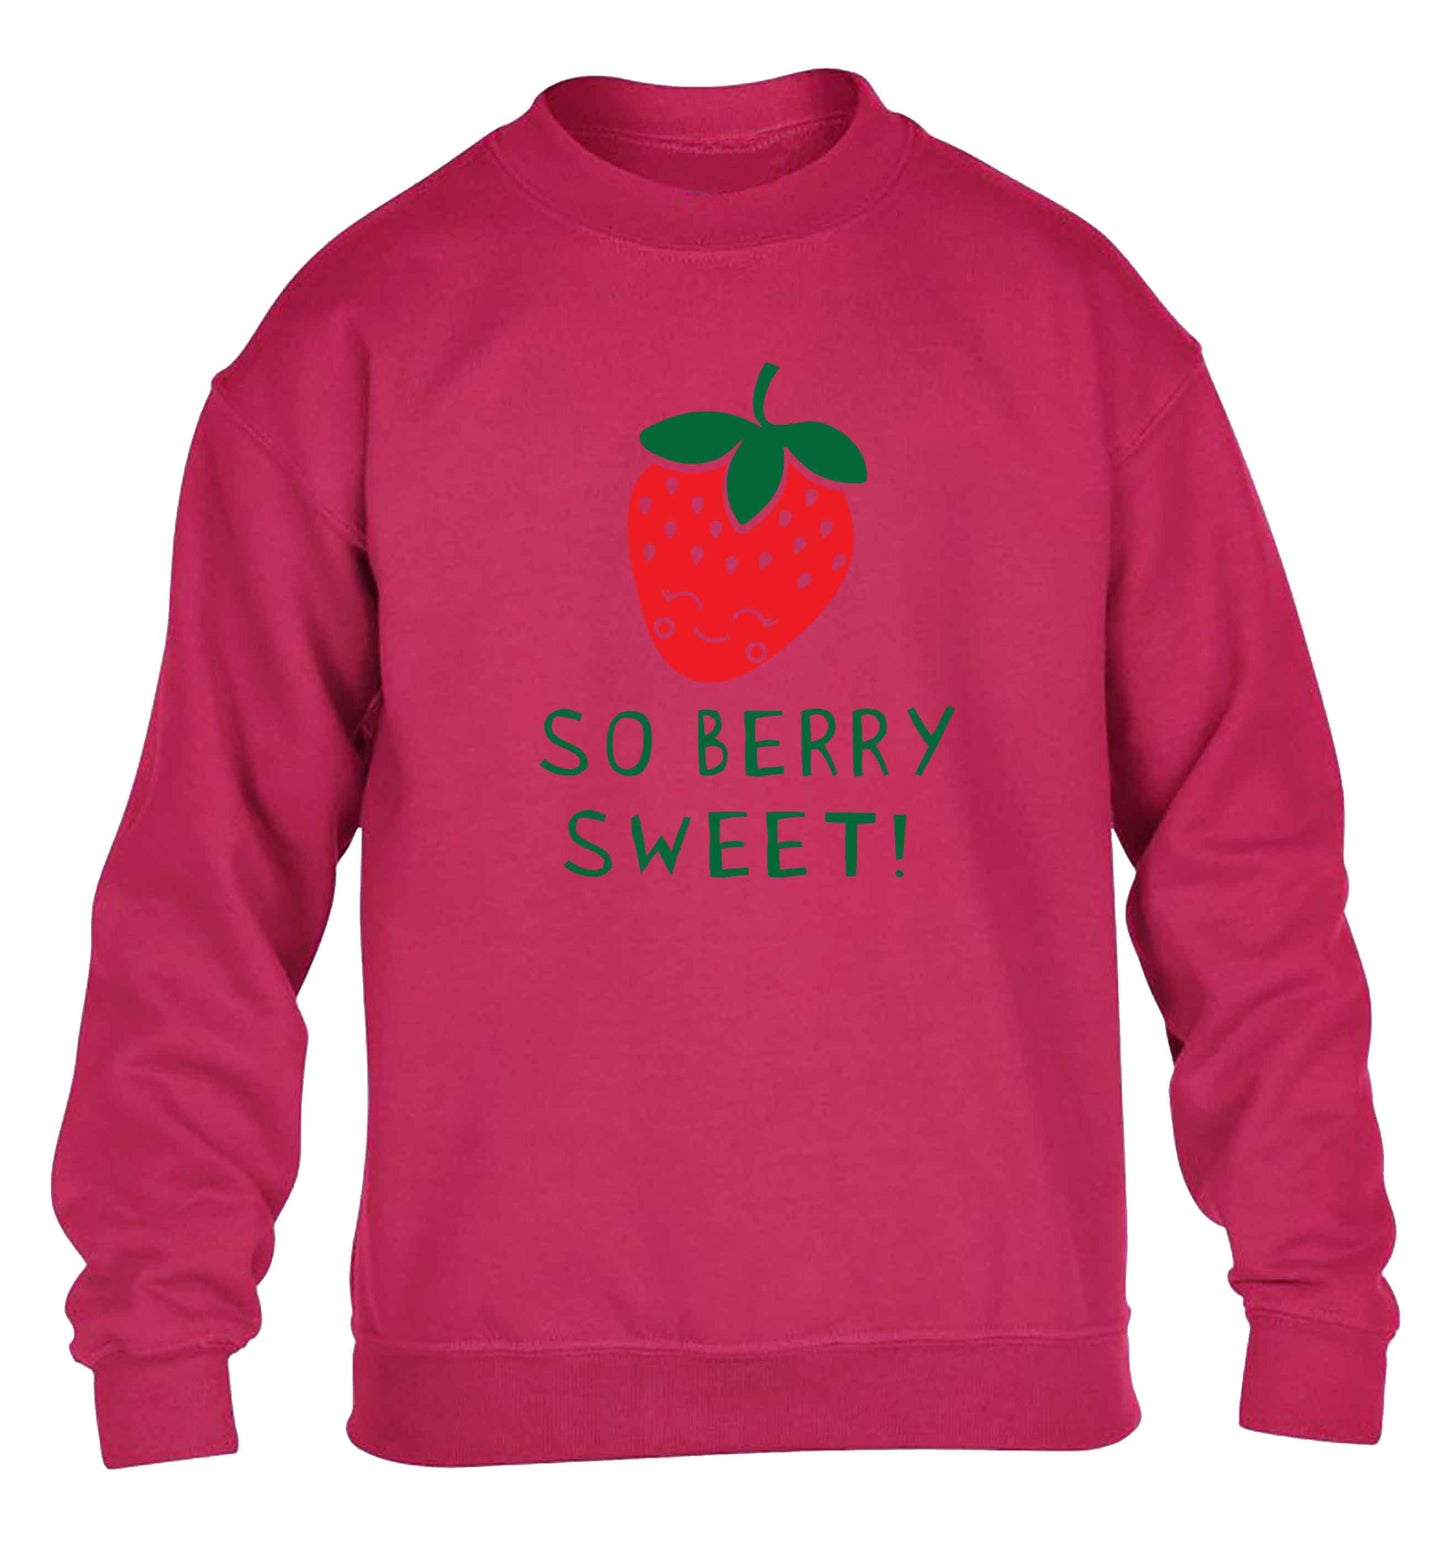 So berry sweet children's pink sweater 12-13 Years